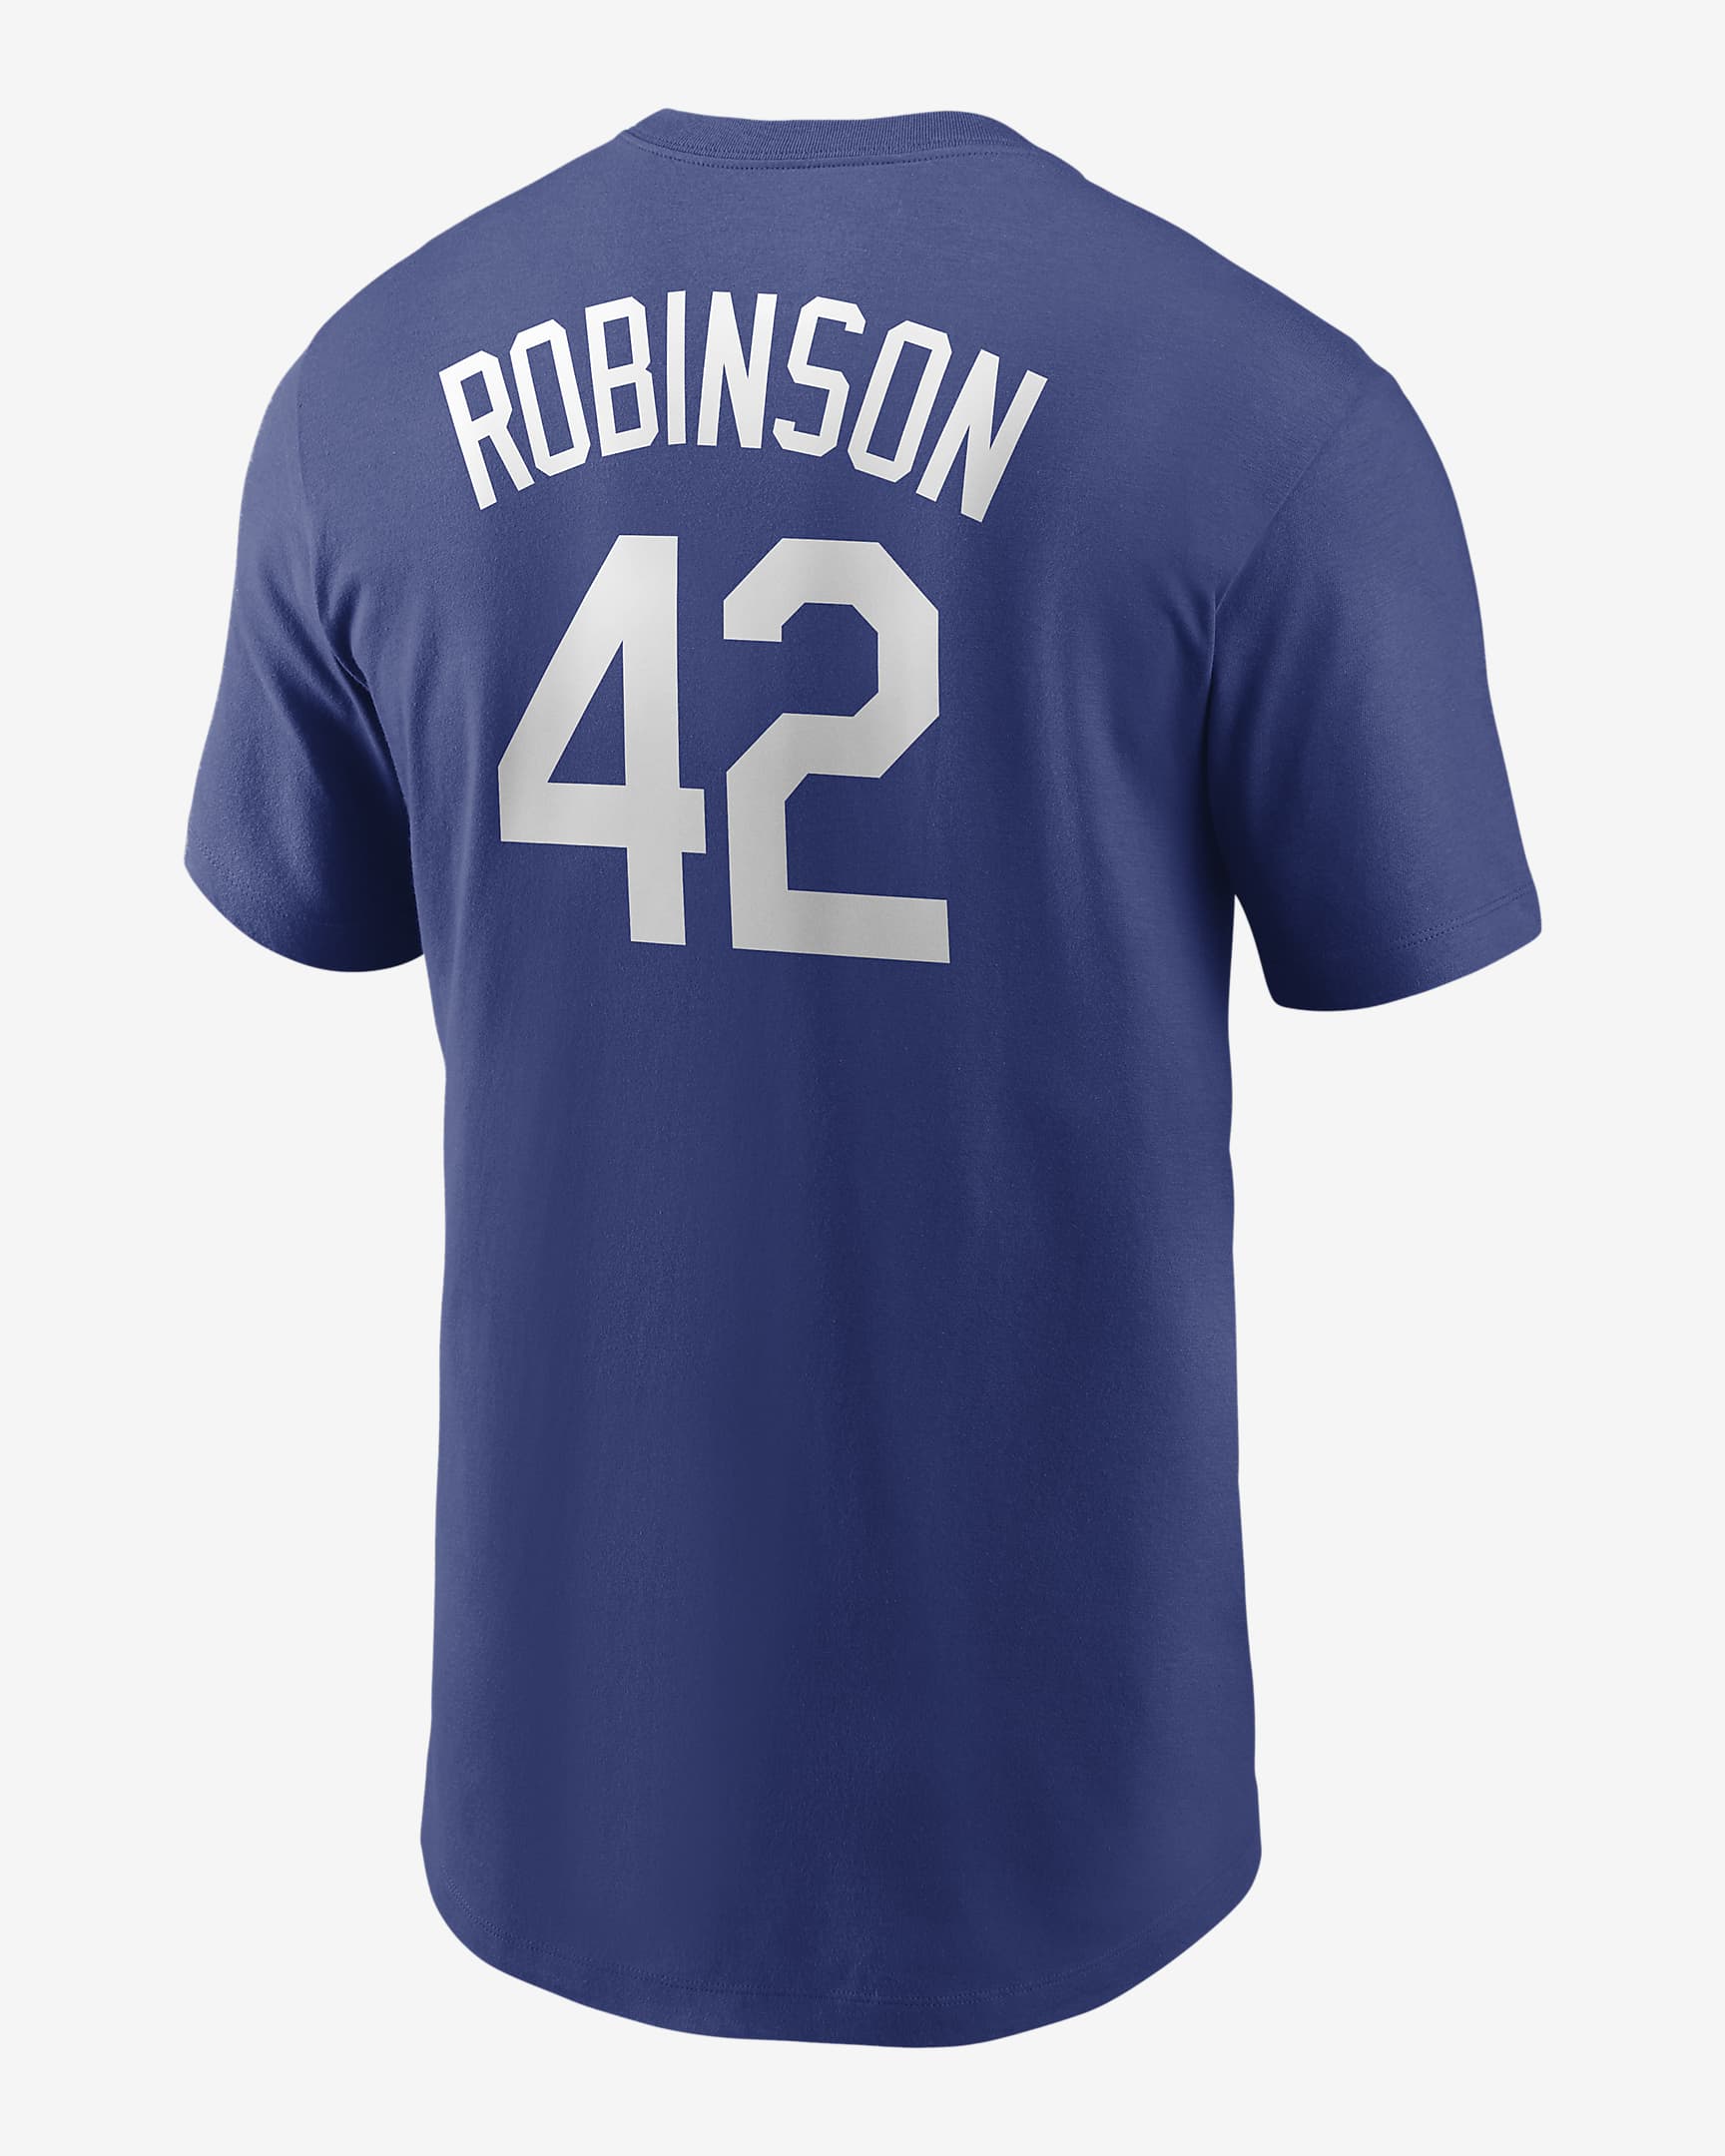 Playera para hombre MLB Brooklyn Dodgers (Jackie Robinson). Nike.com